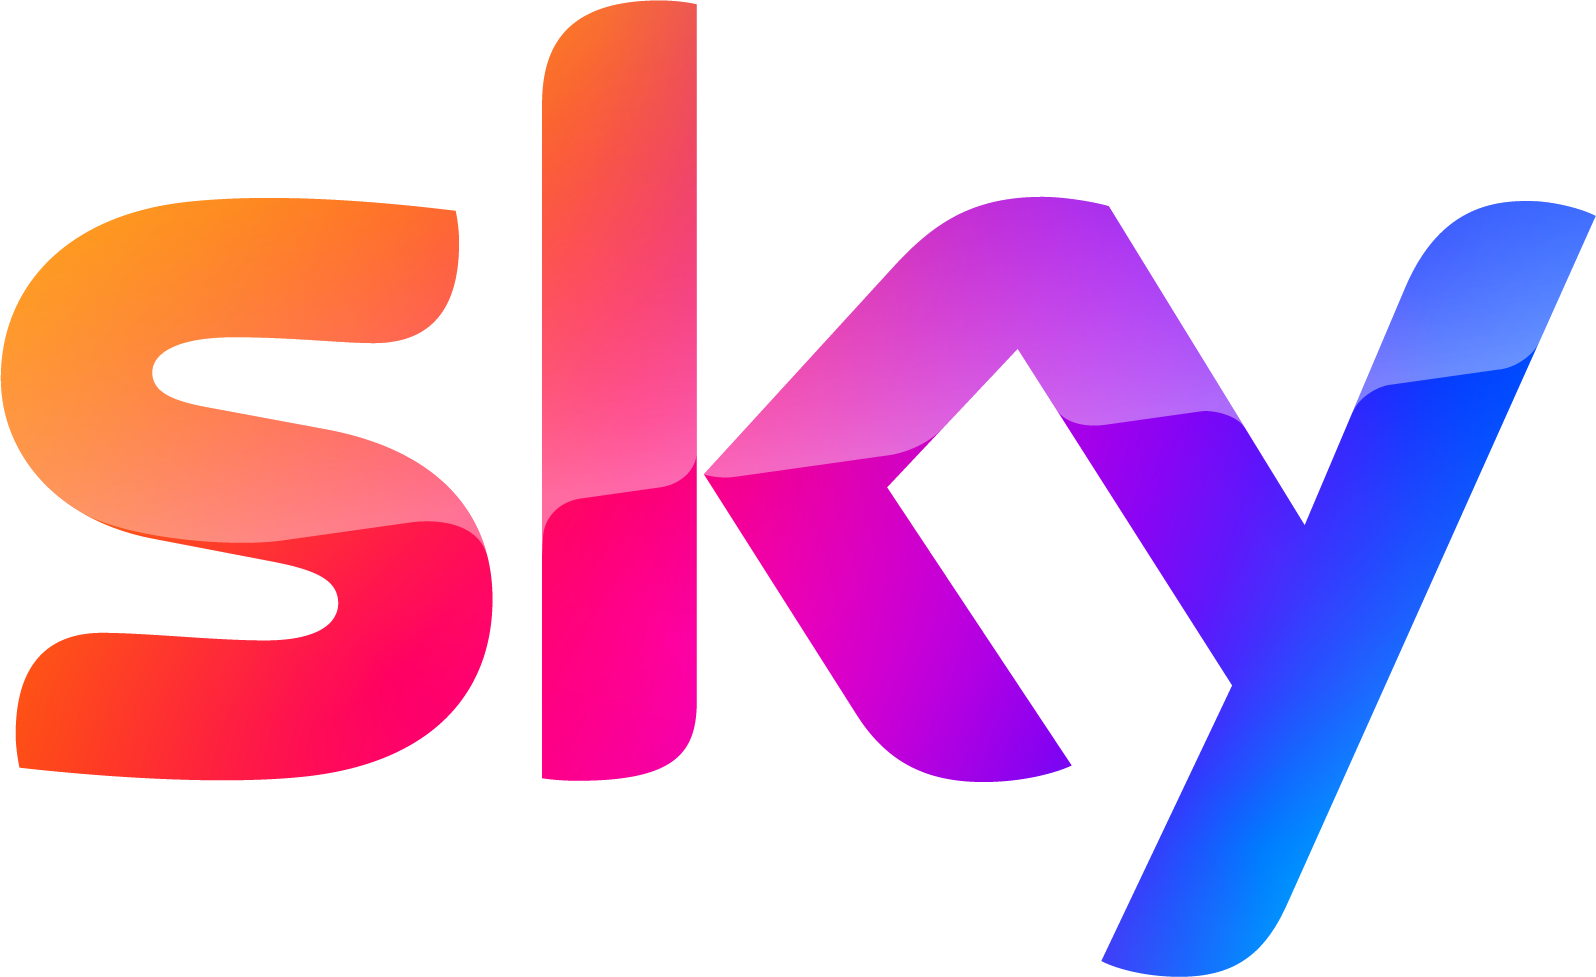 Sky Mobile Logo